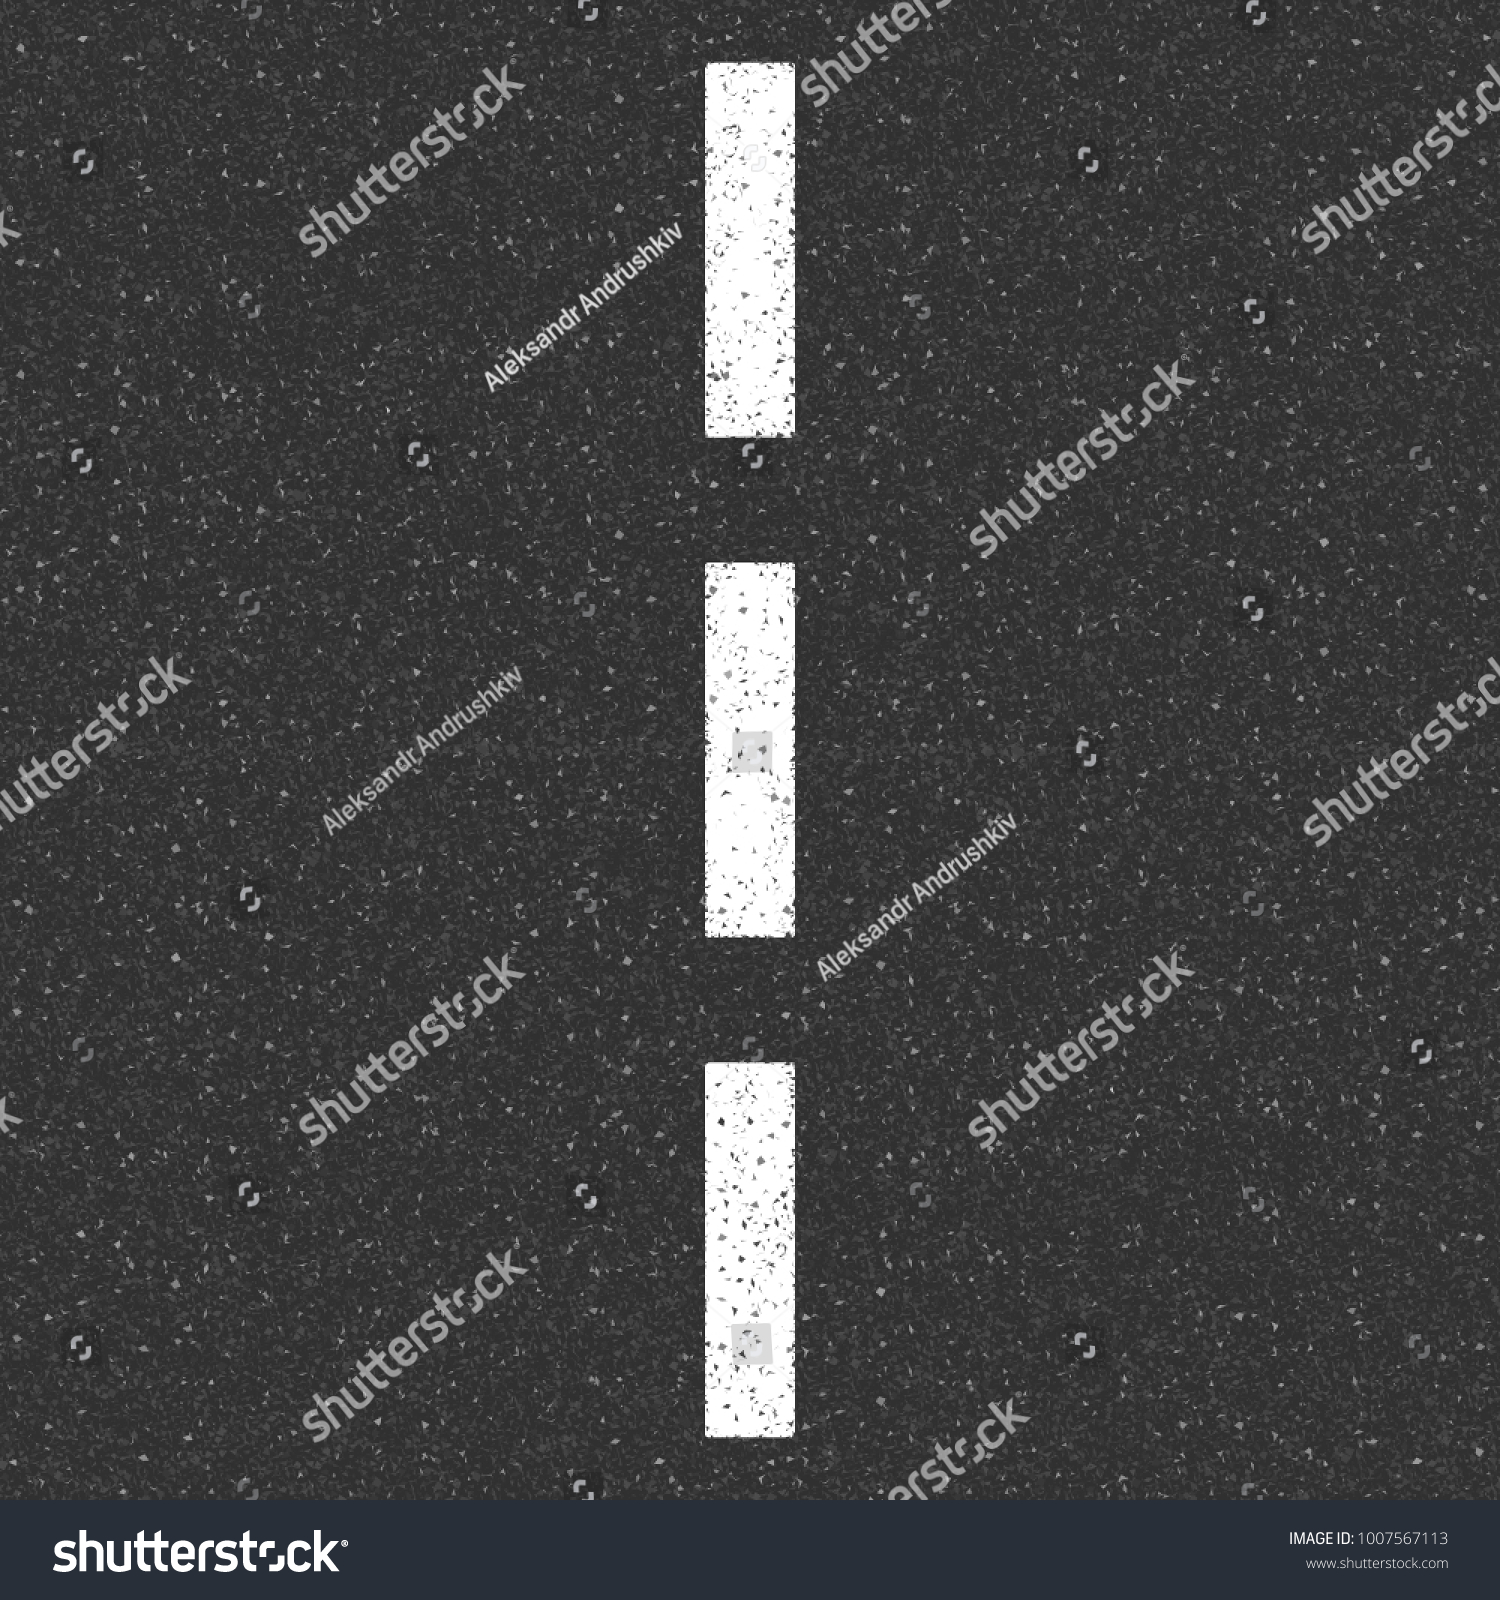 SVG of Asphalt texture with road markings. Seamless vector illustration. svg